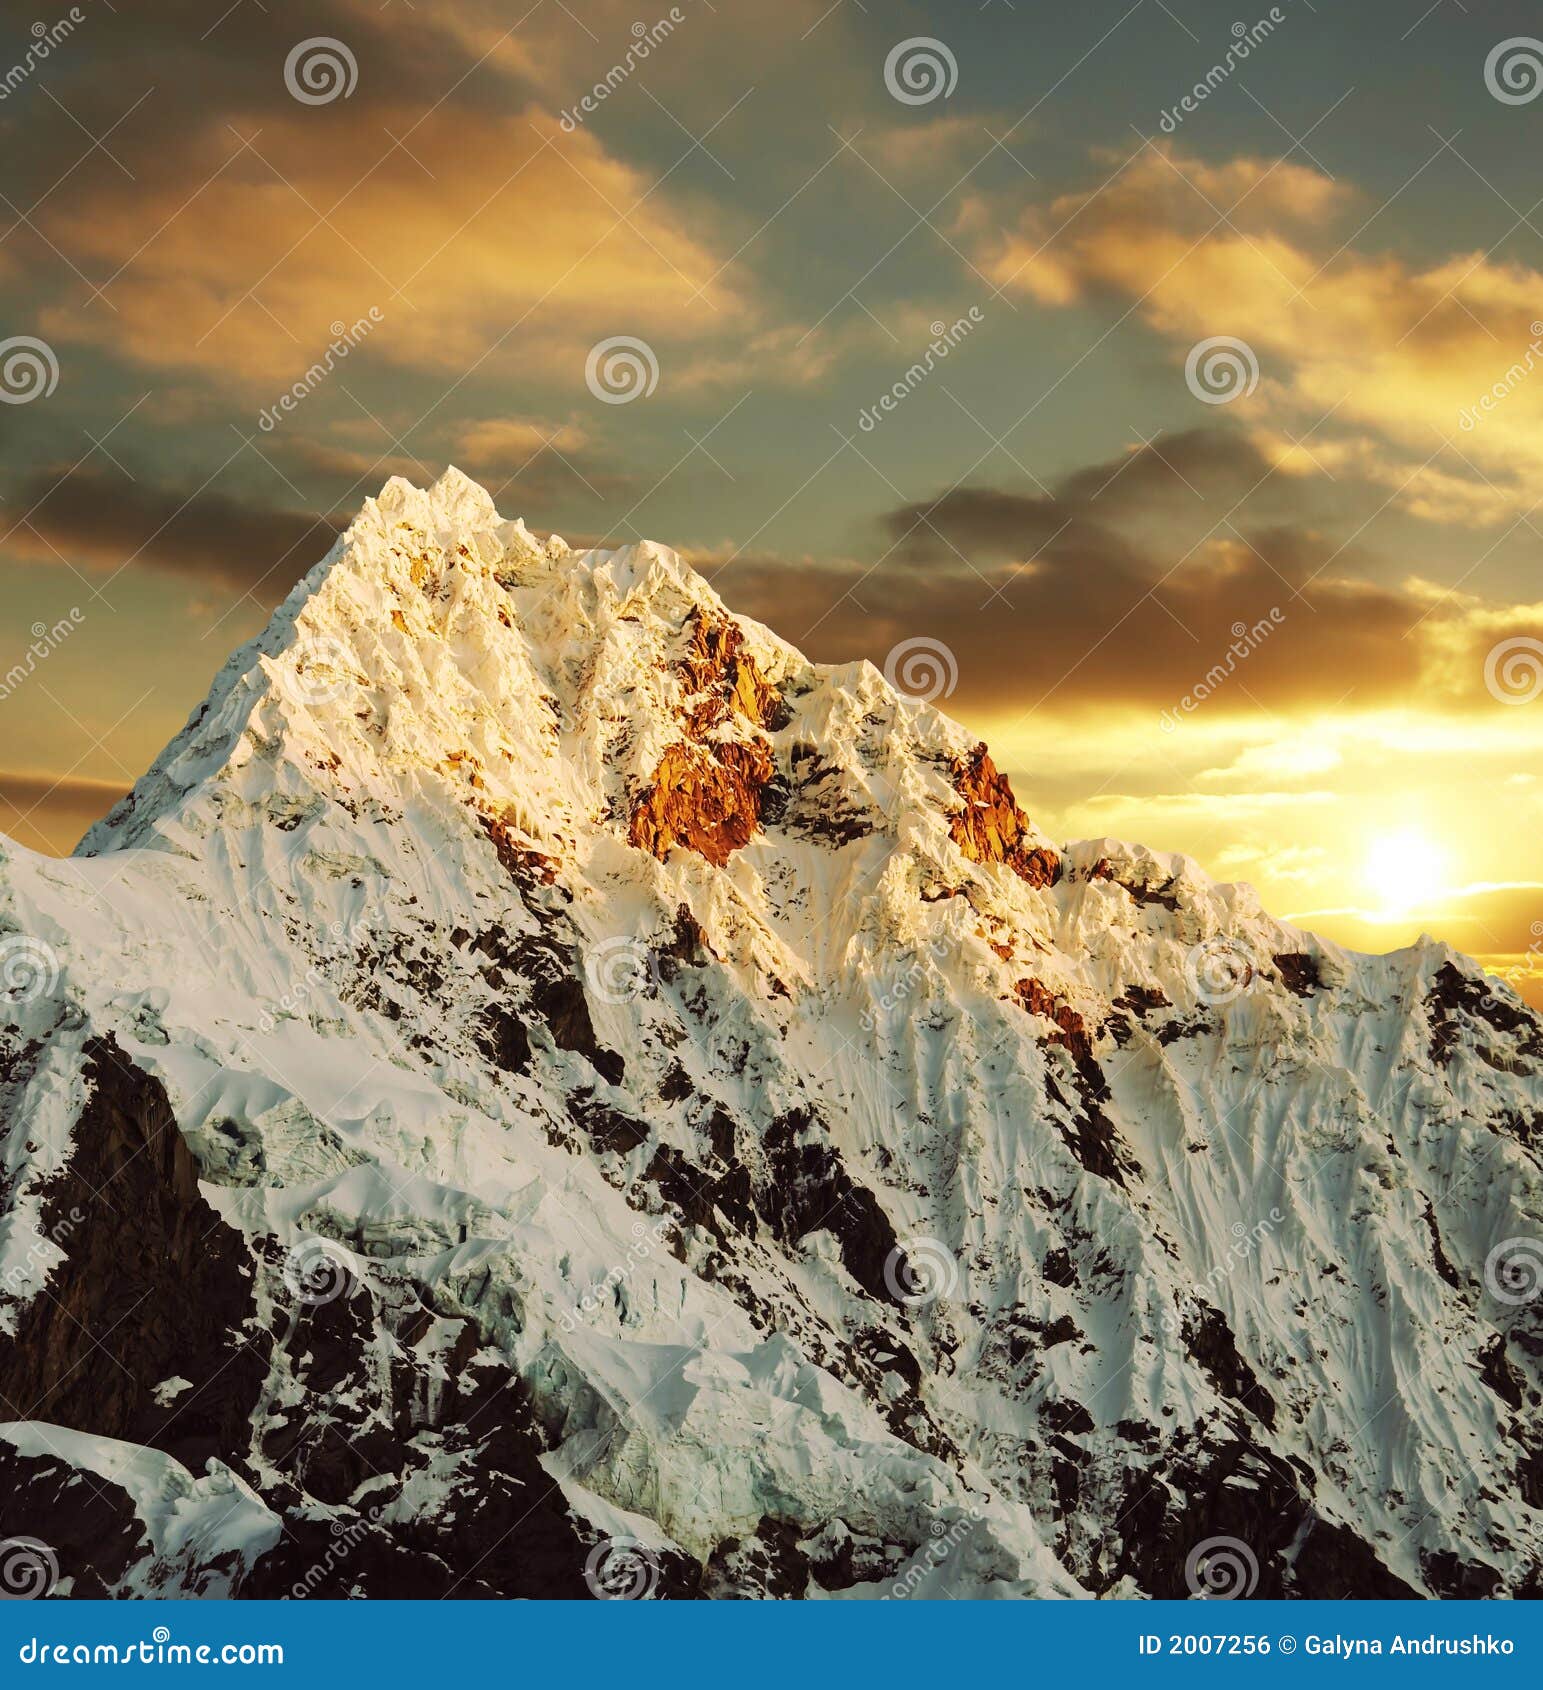 beautiful peak alpamayo